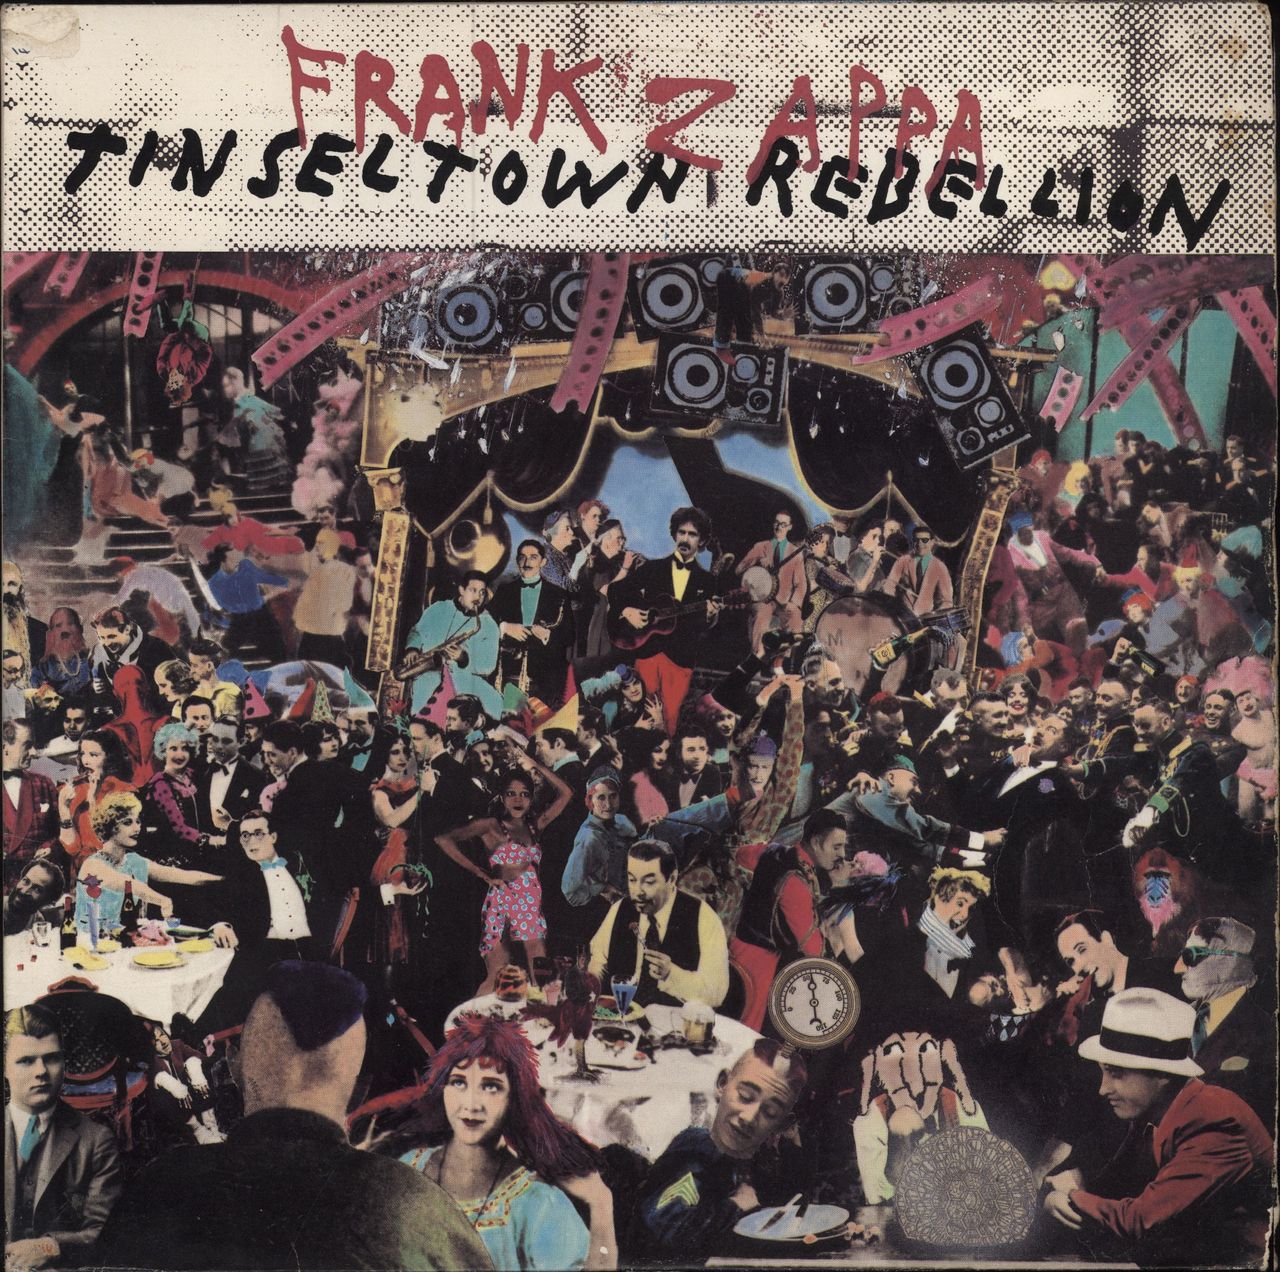 Frank Zappa Tinsel Town Rebellion South African 2-LP vinyl record set (Double LP Album) AGP103/104